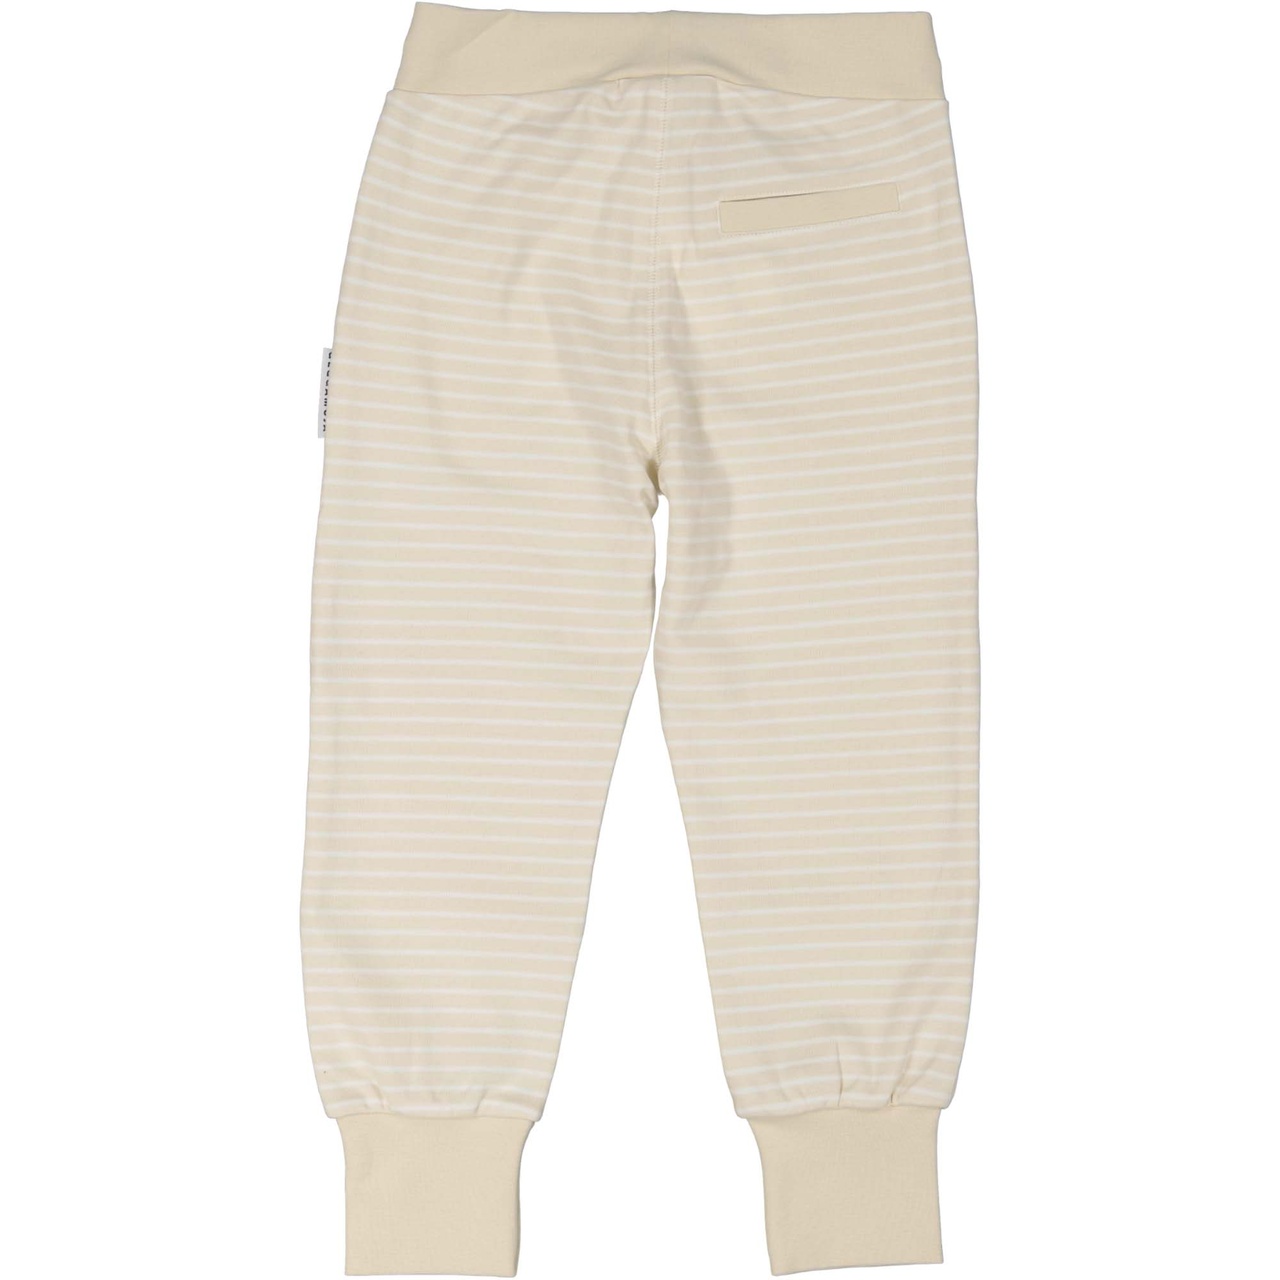 Long pants Beige/white 134/140